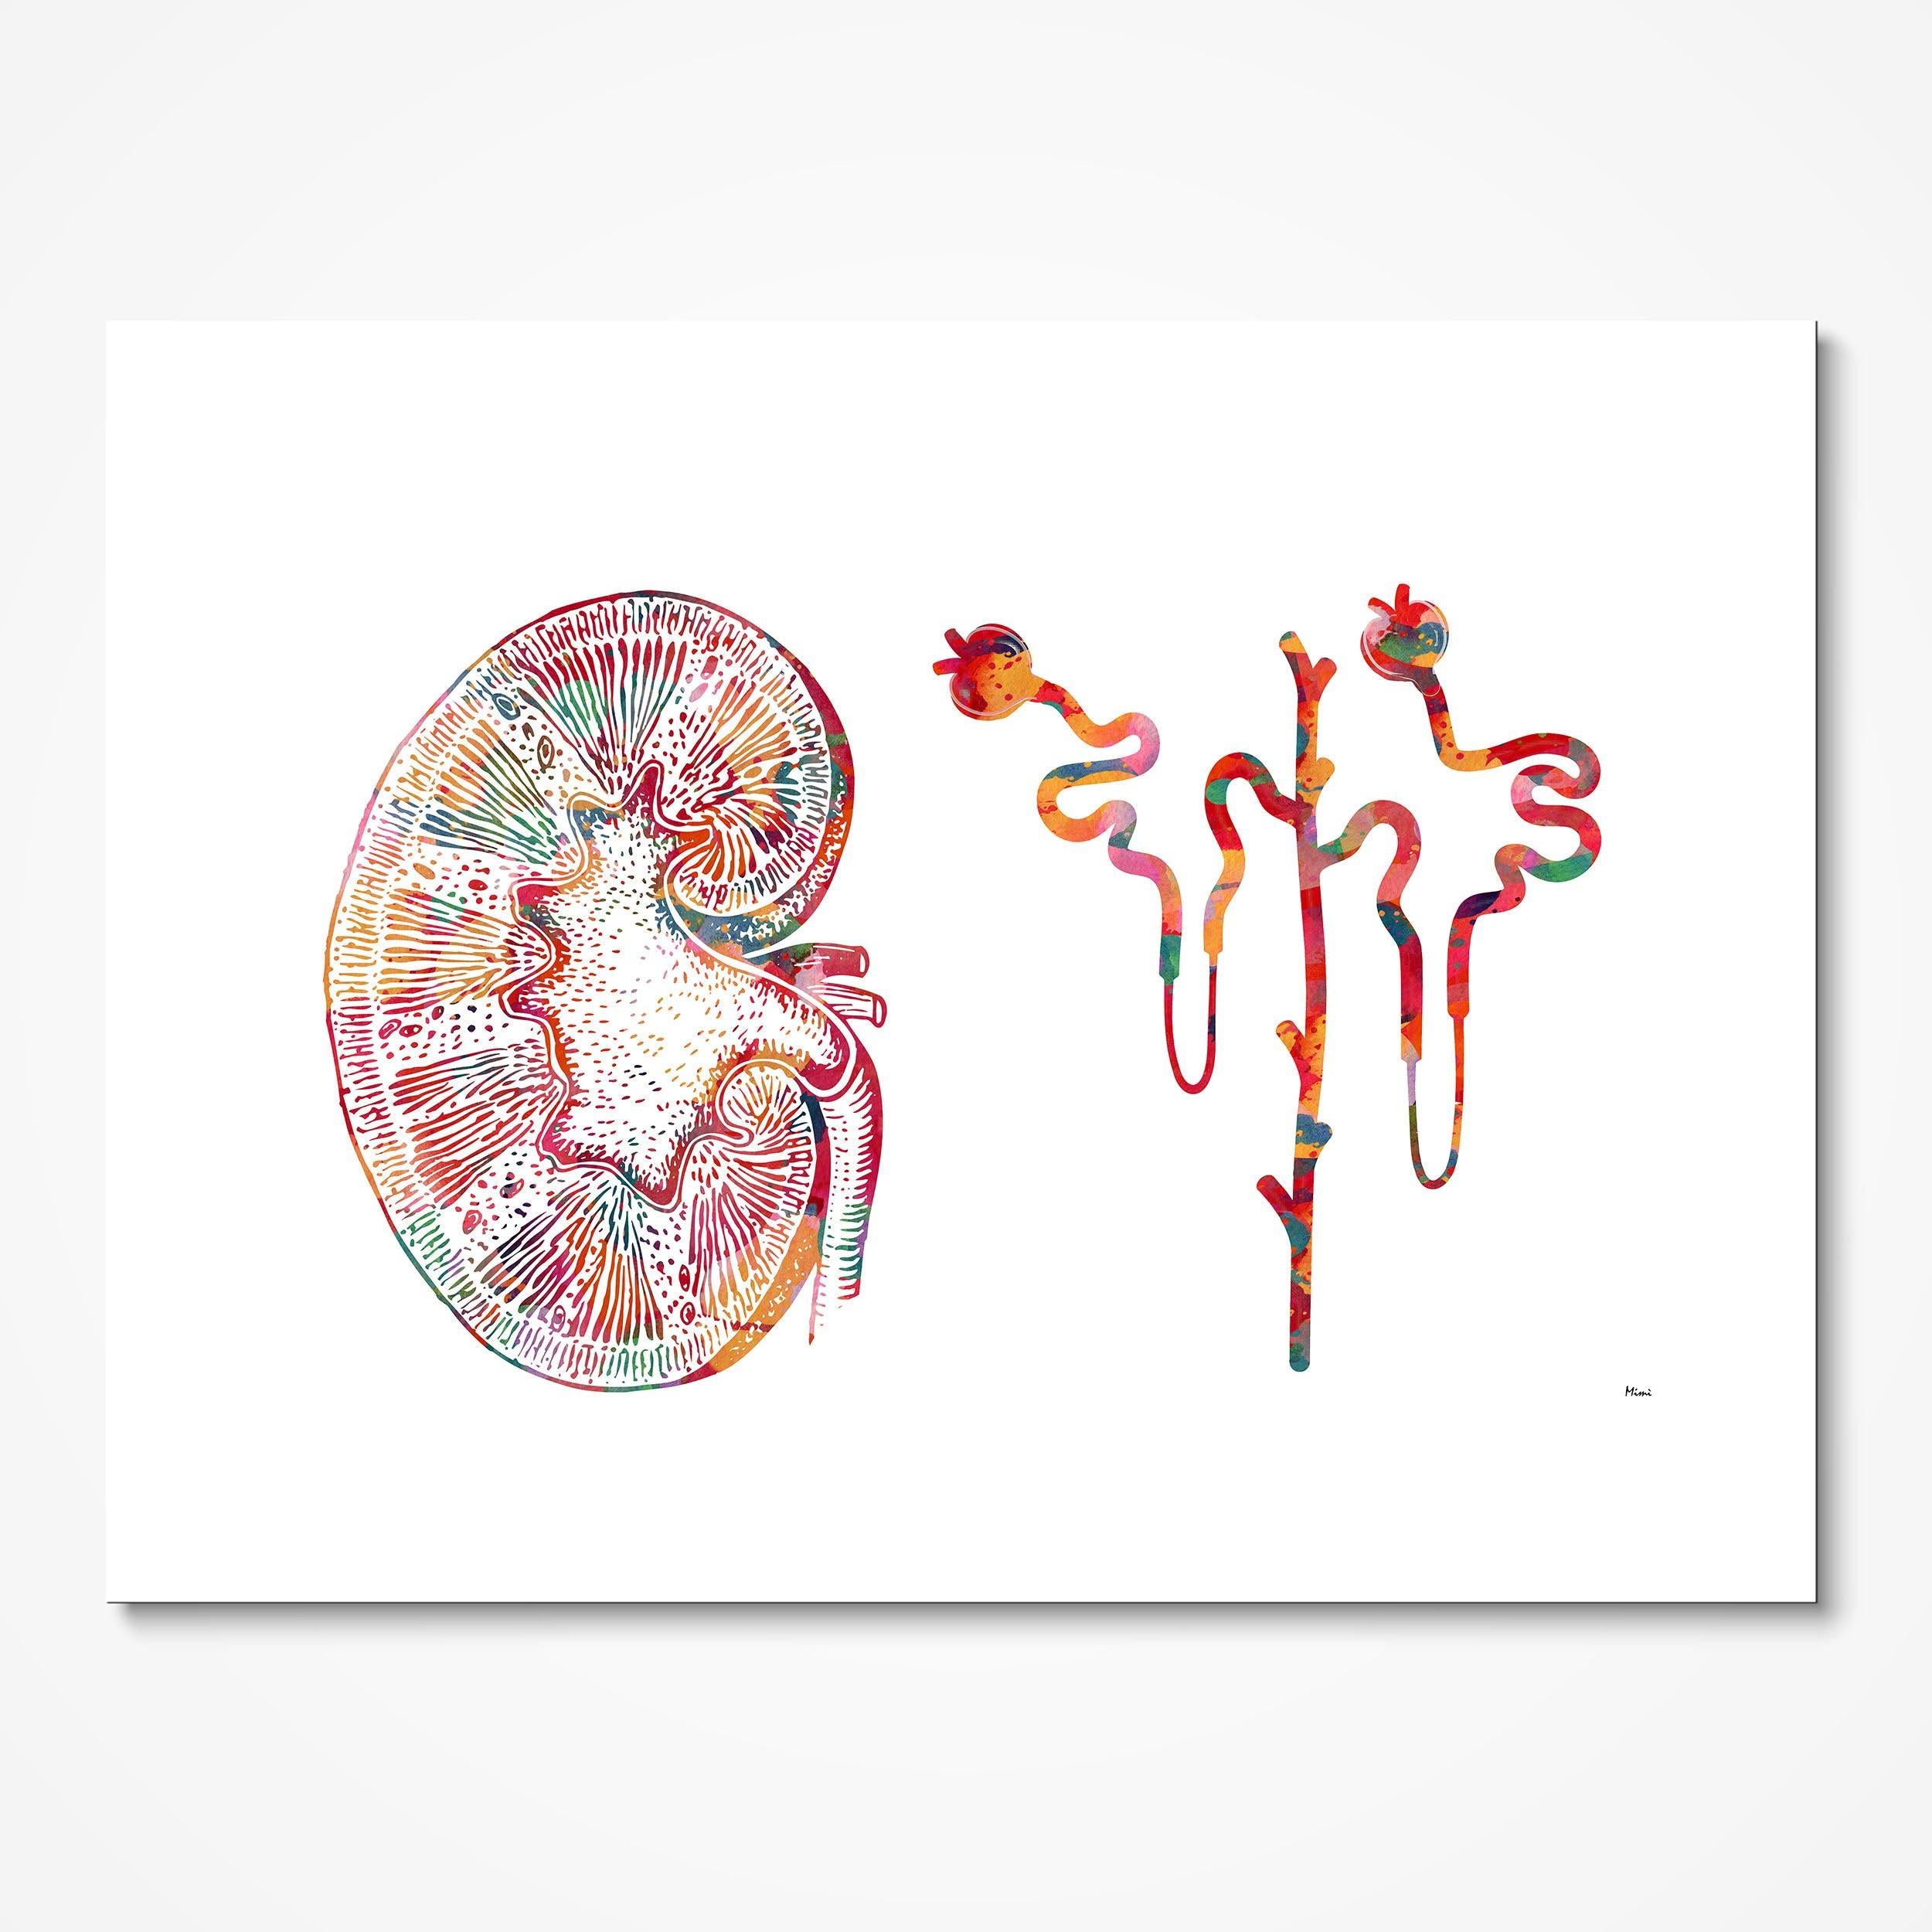 Kidney With Nephron And Glomerulus Anatomy Print Medical Illustration Medicine Clinic Wall Decor